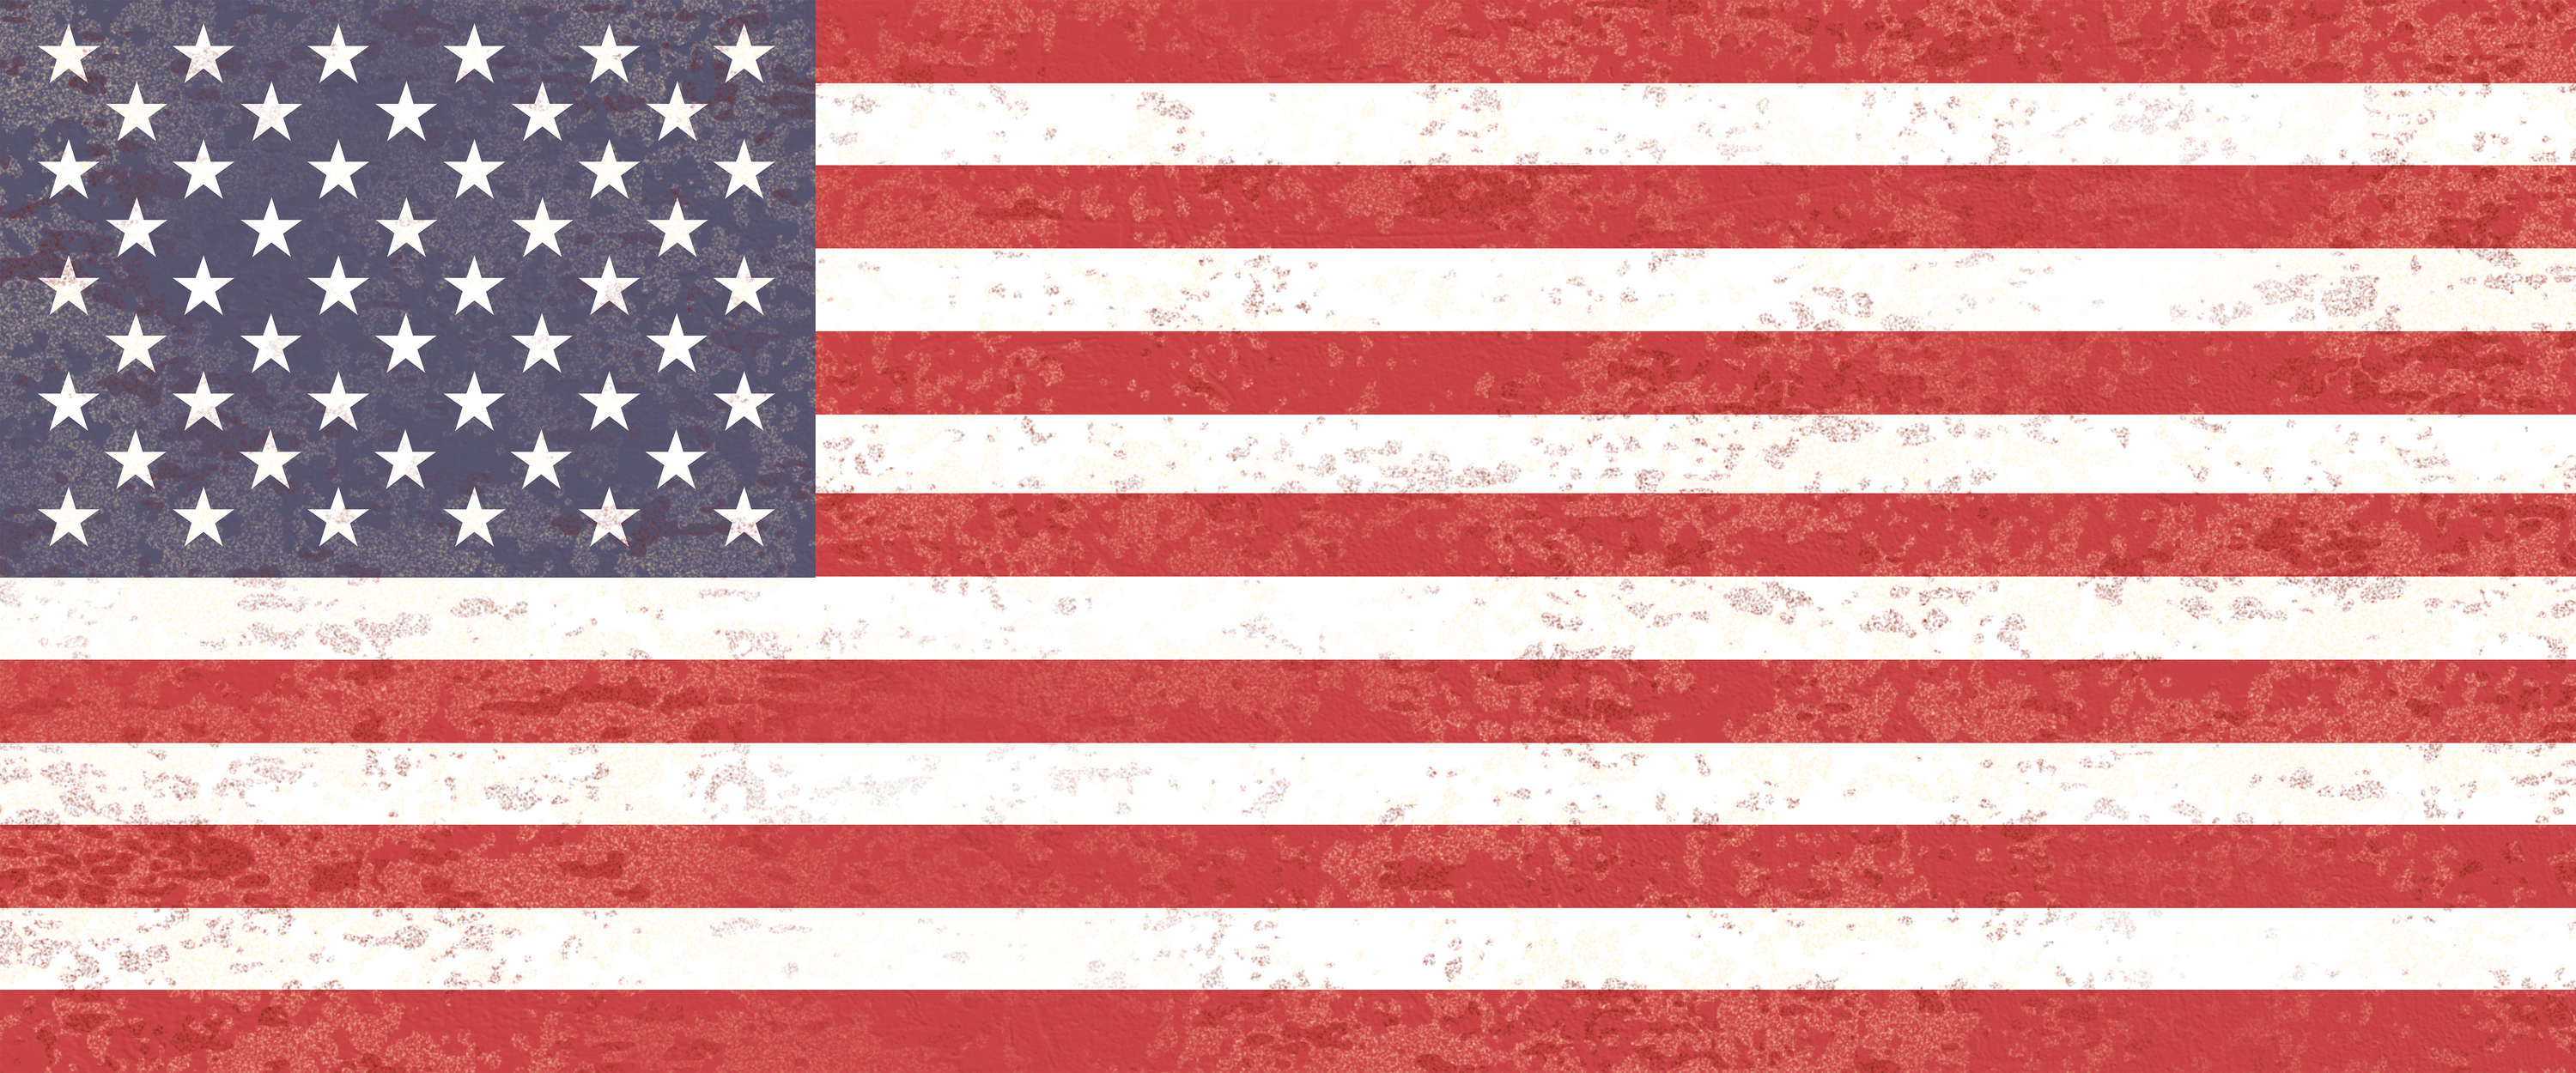             Amerikaanse Vlag Behang - Sterren en Strepen
        